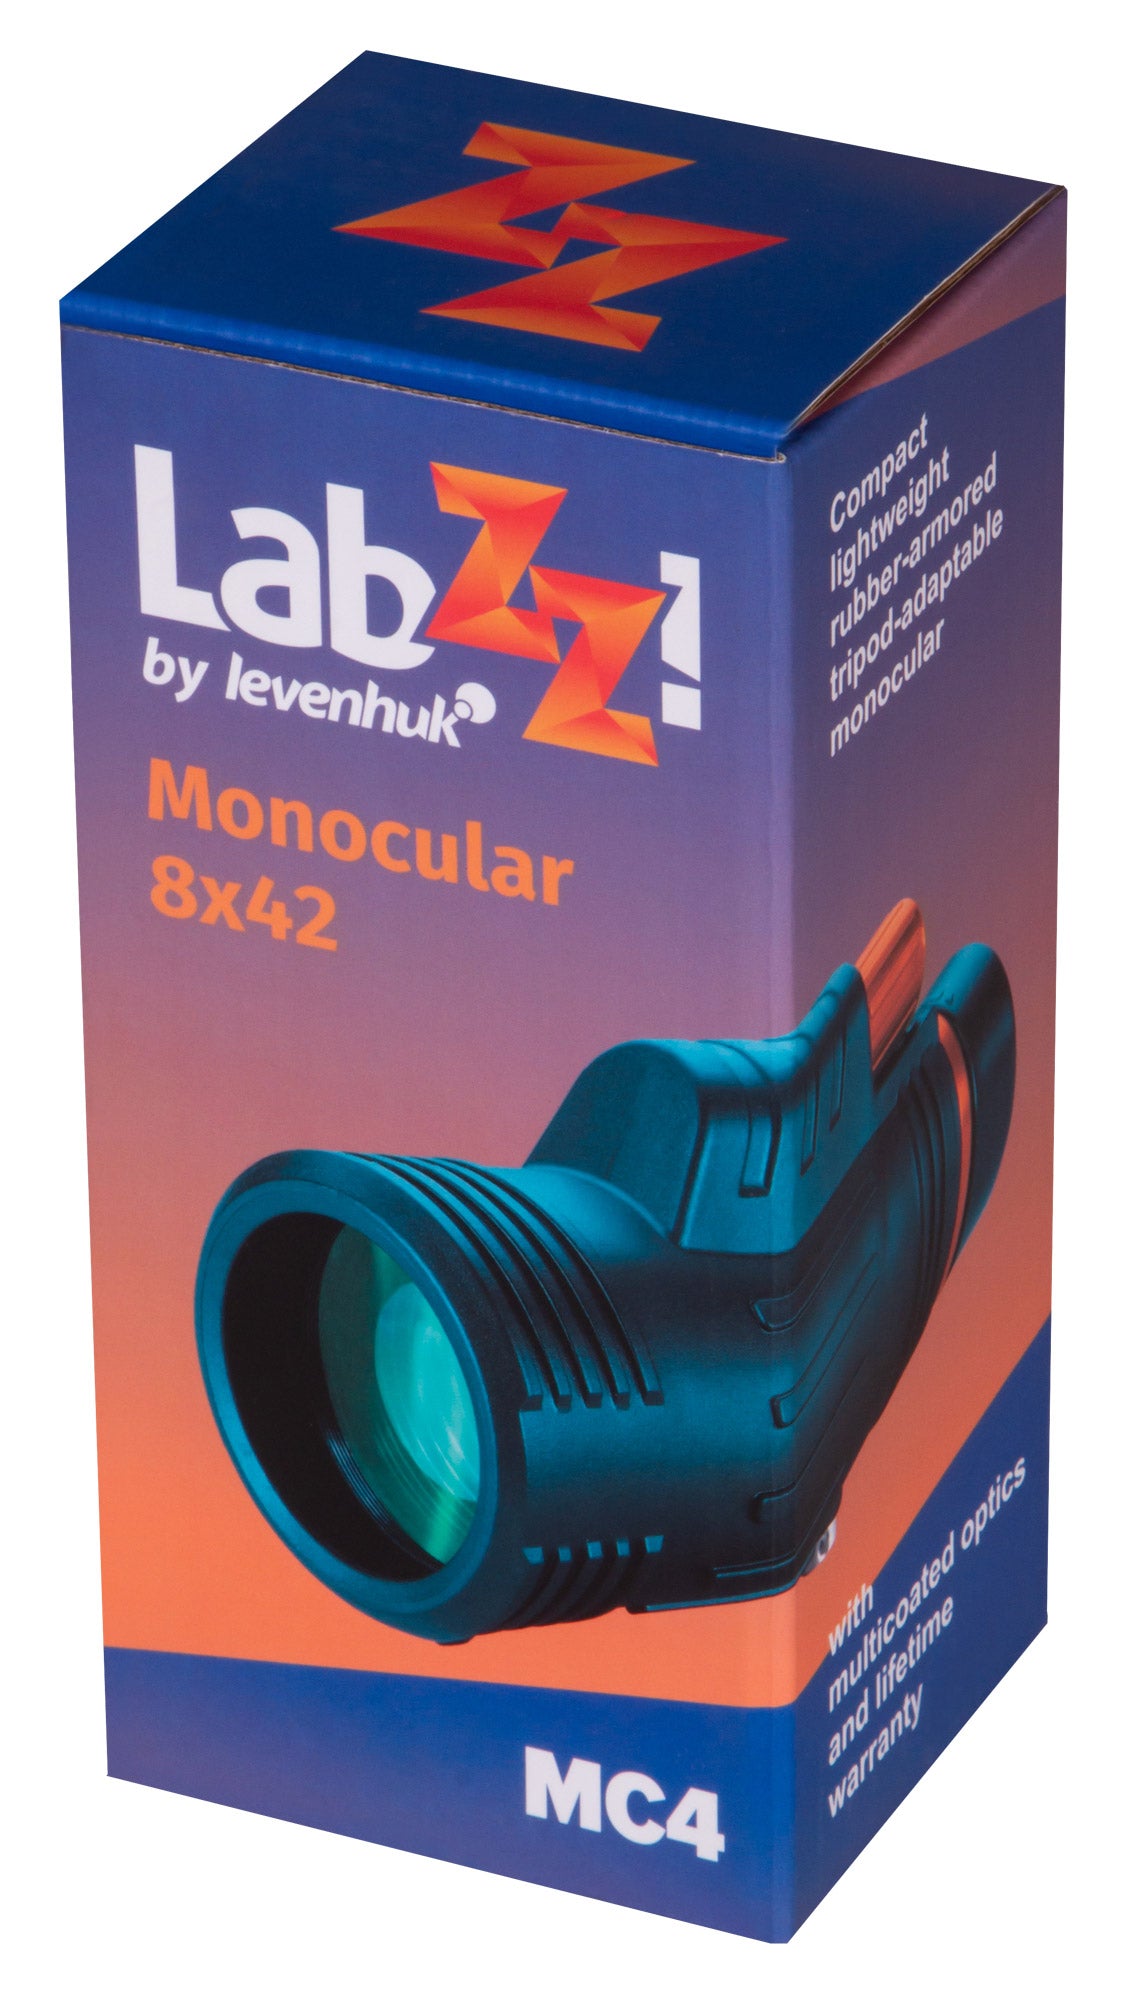 Levenhuk LabZZ MC4 Monocular